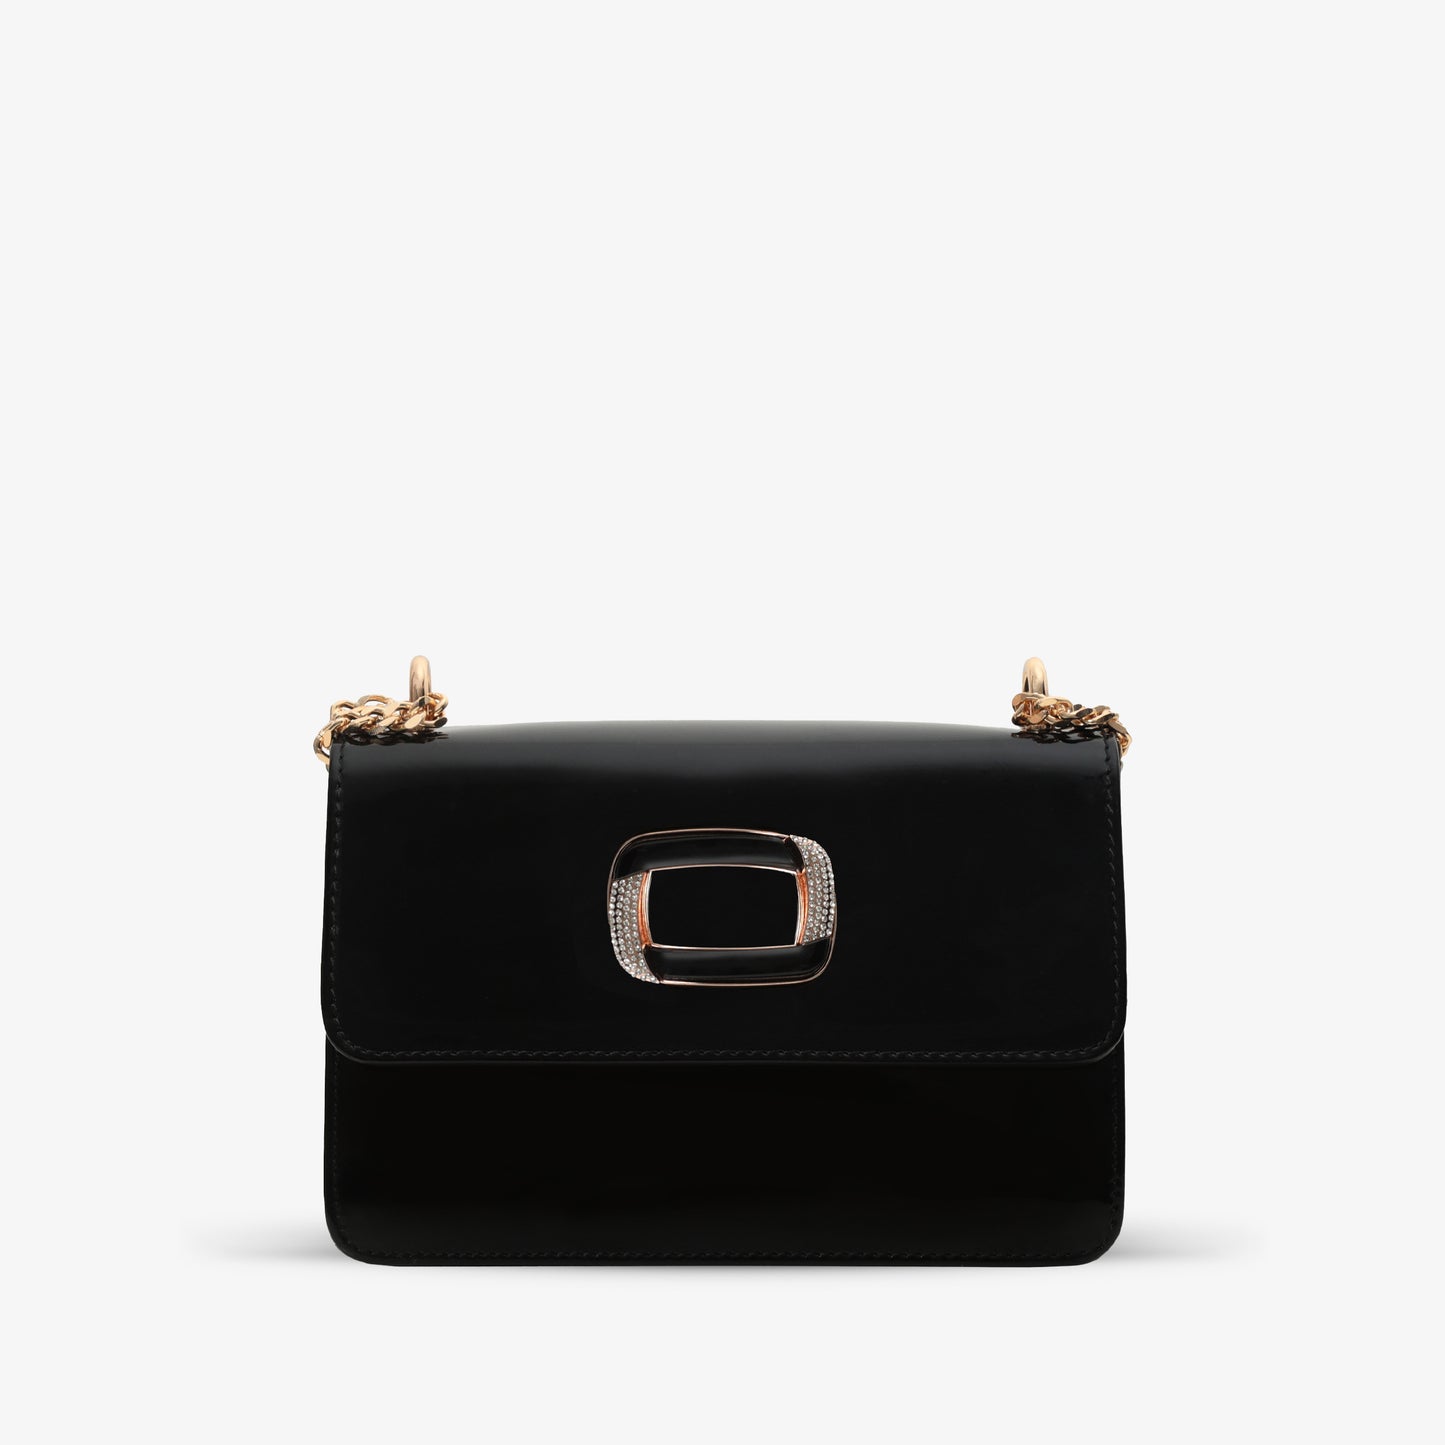 The Ferrara Black Patent Leather Handbag